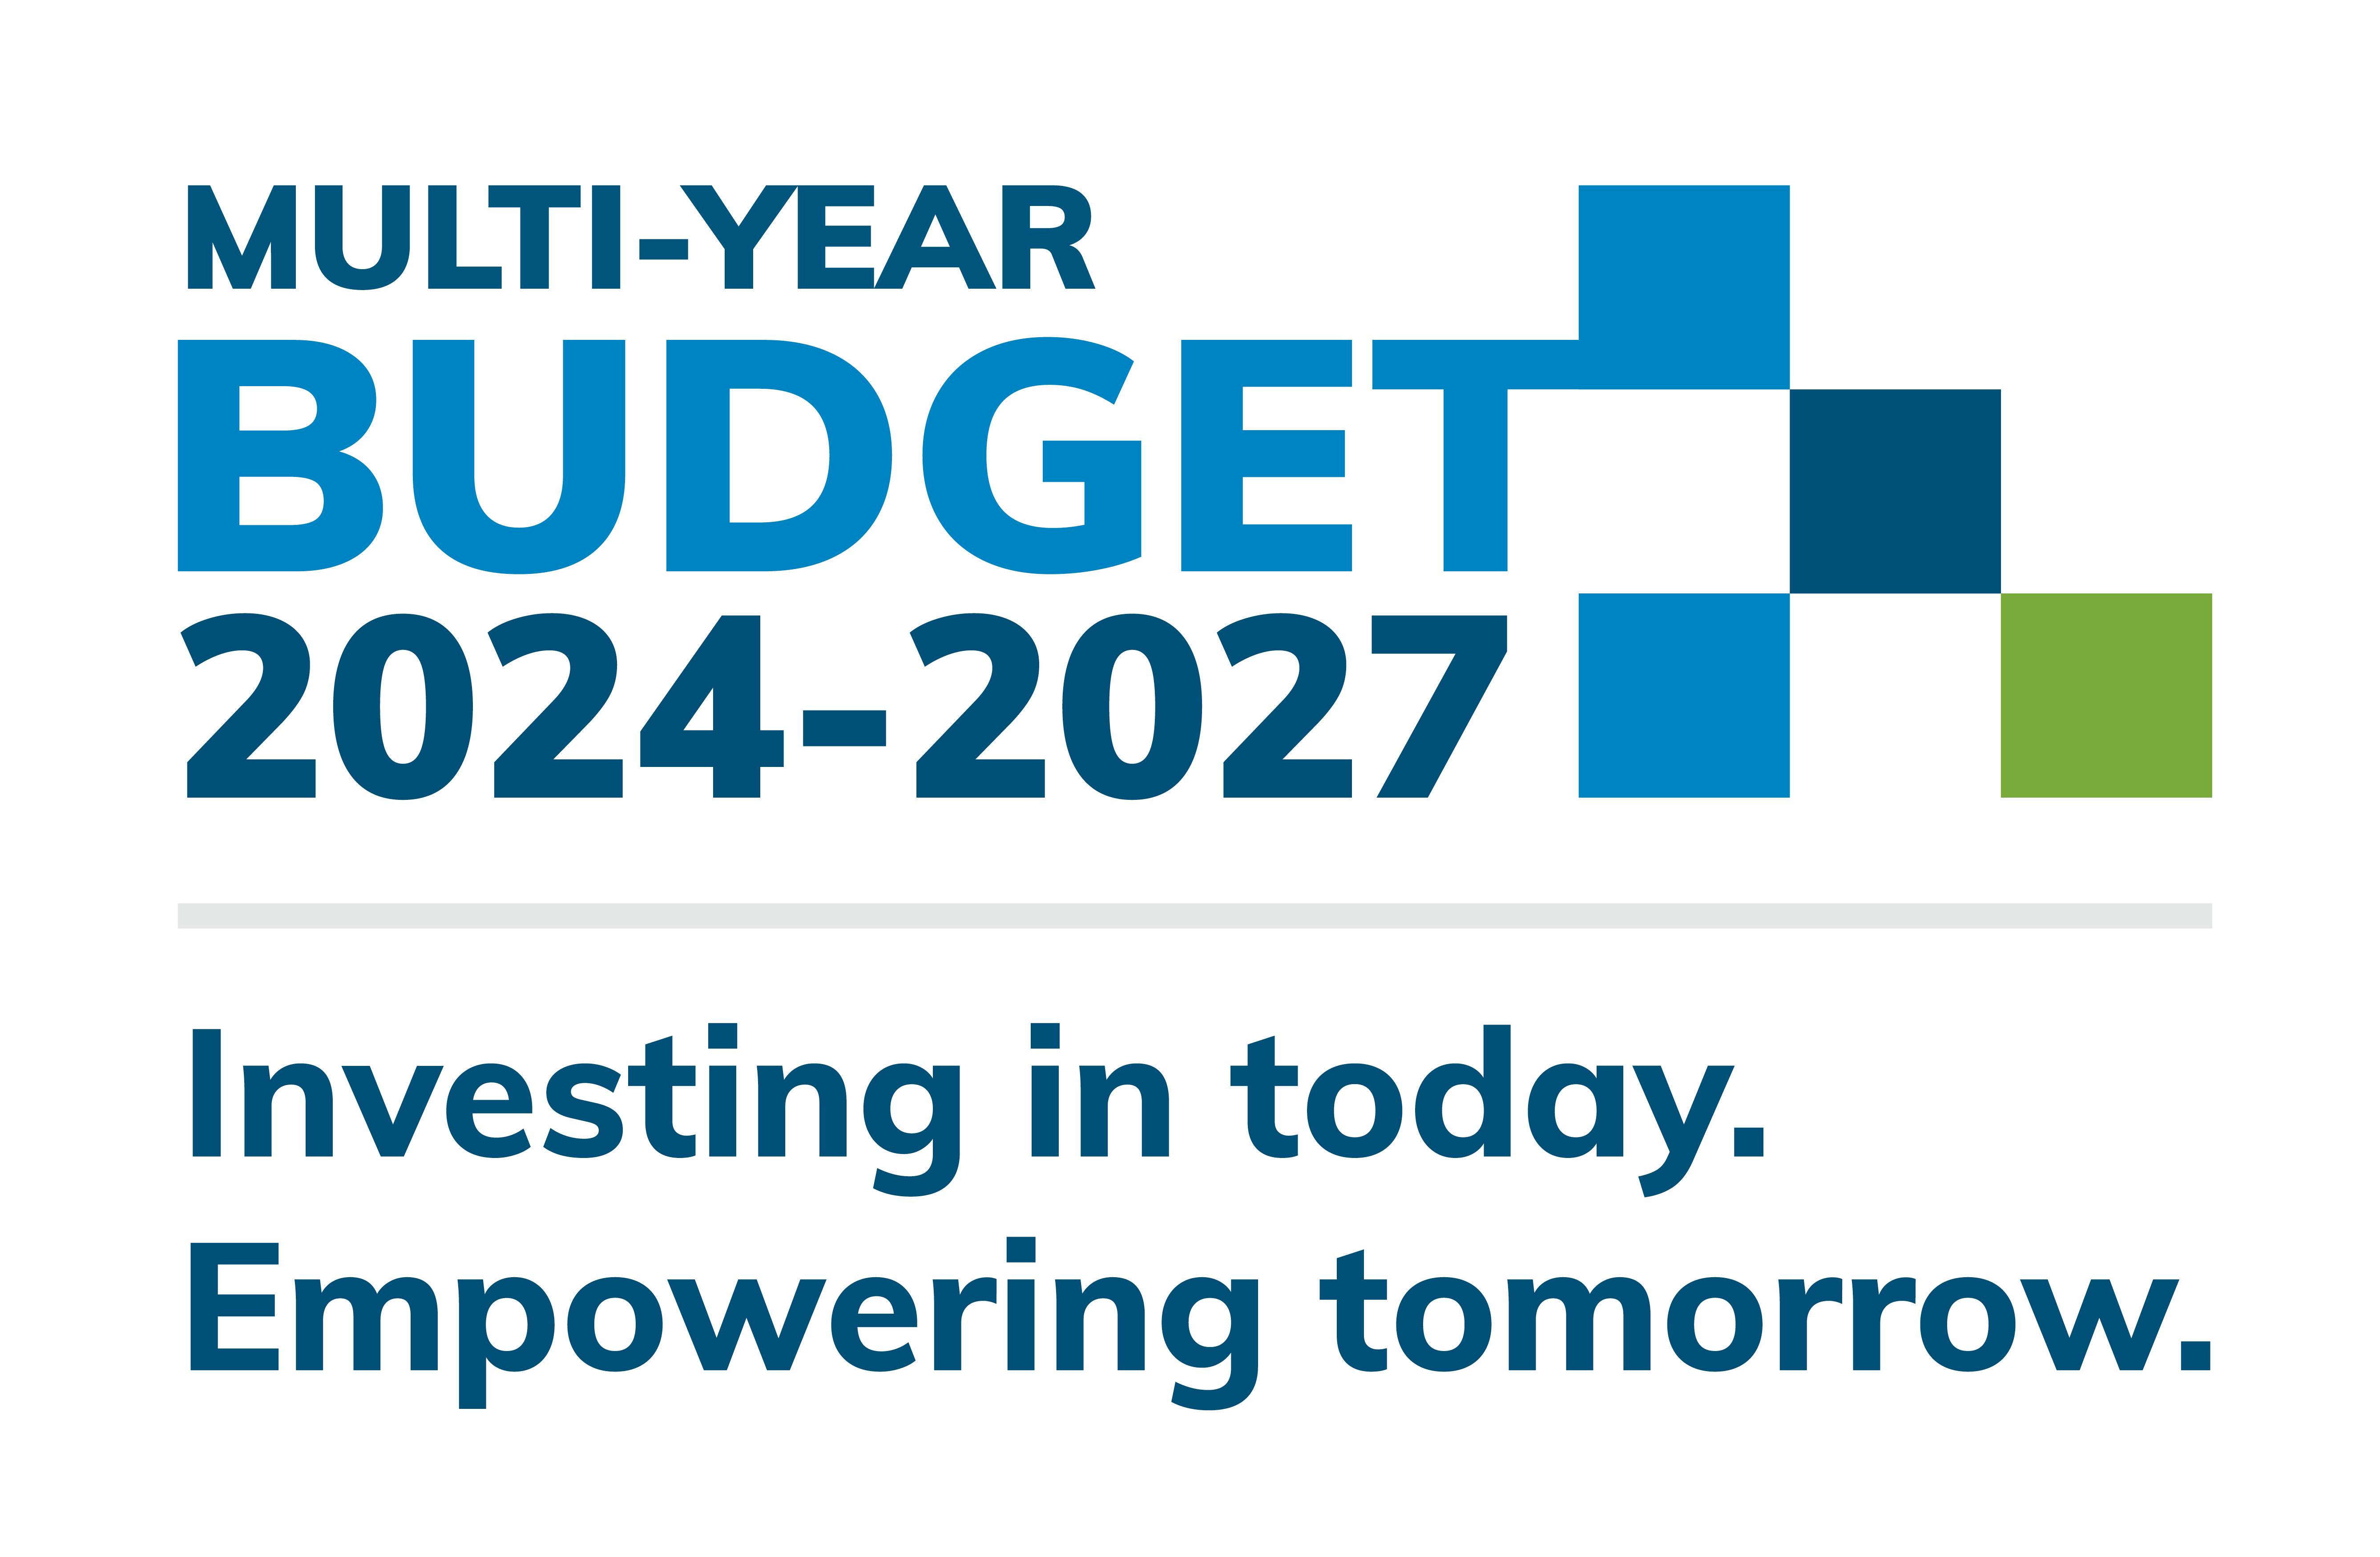 Budget 2024-2027 Logo_Horizonal.png